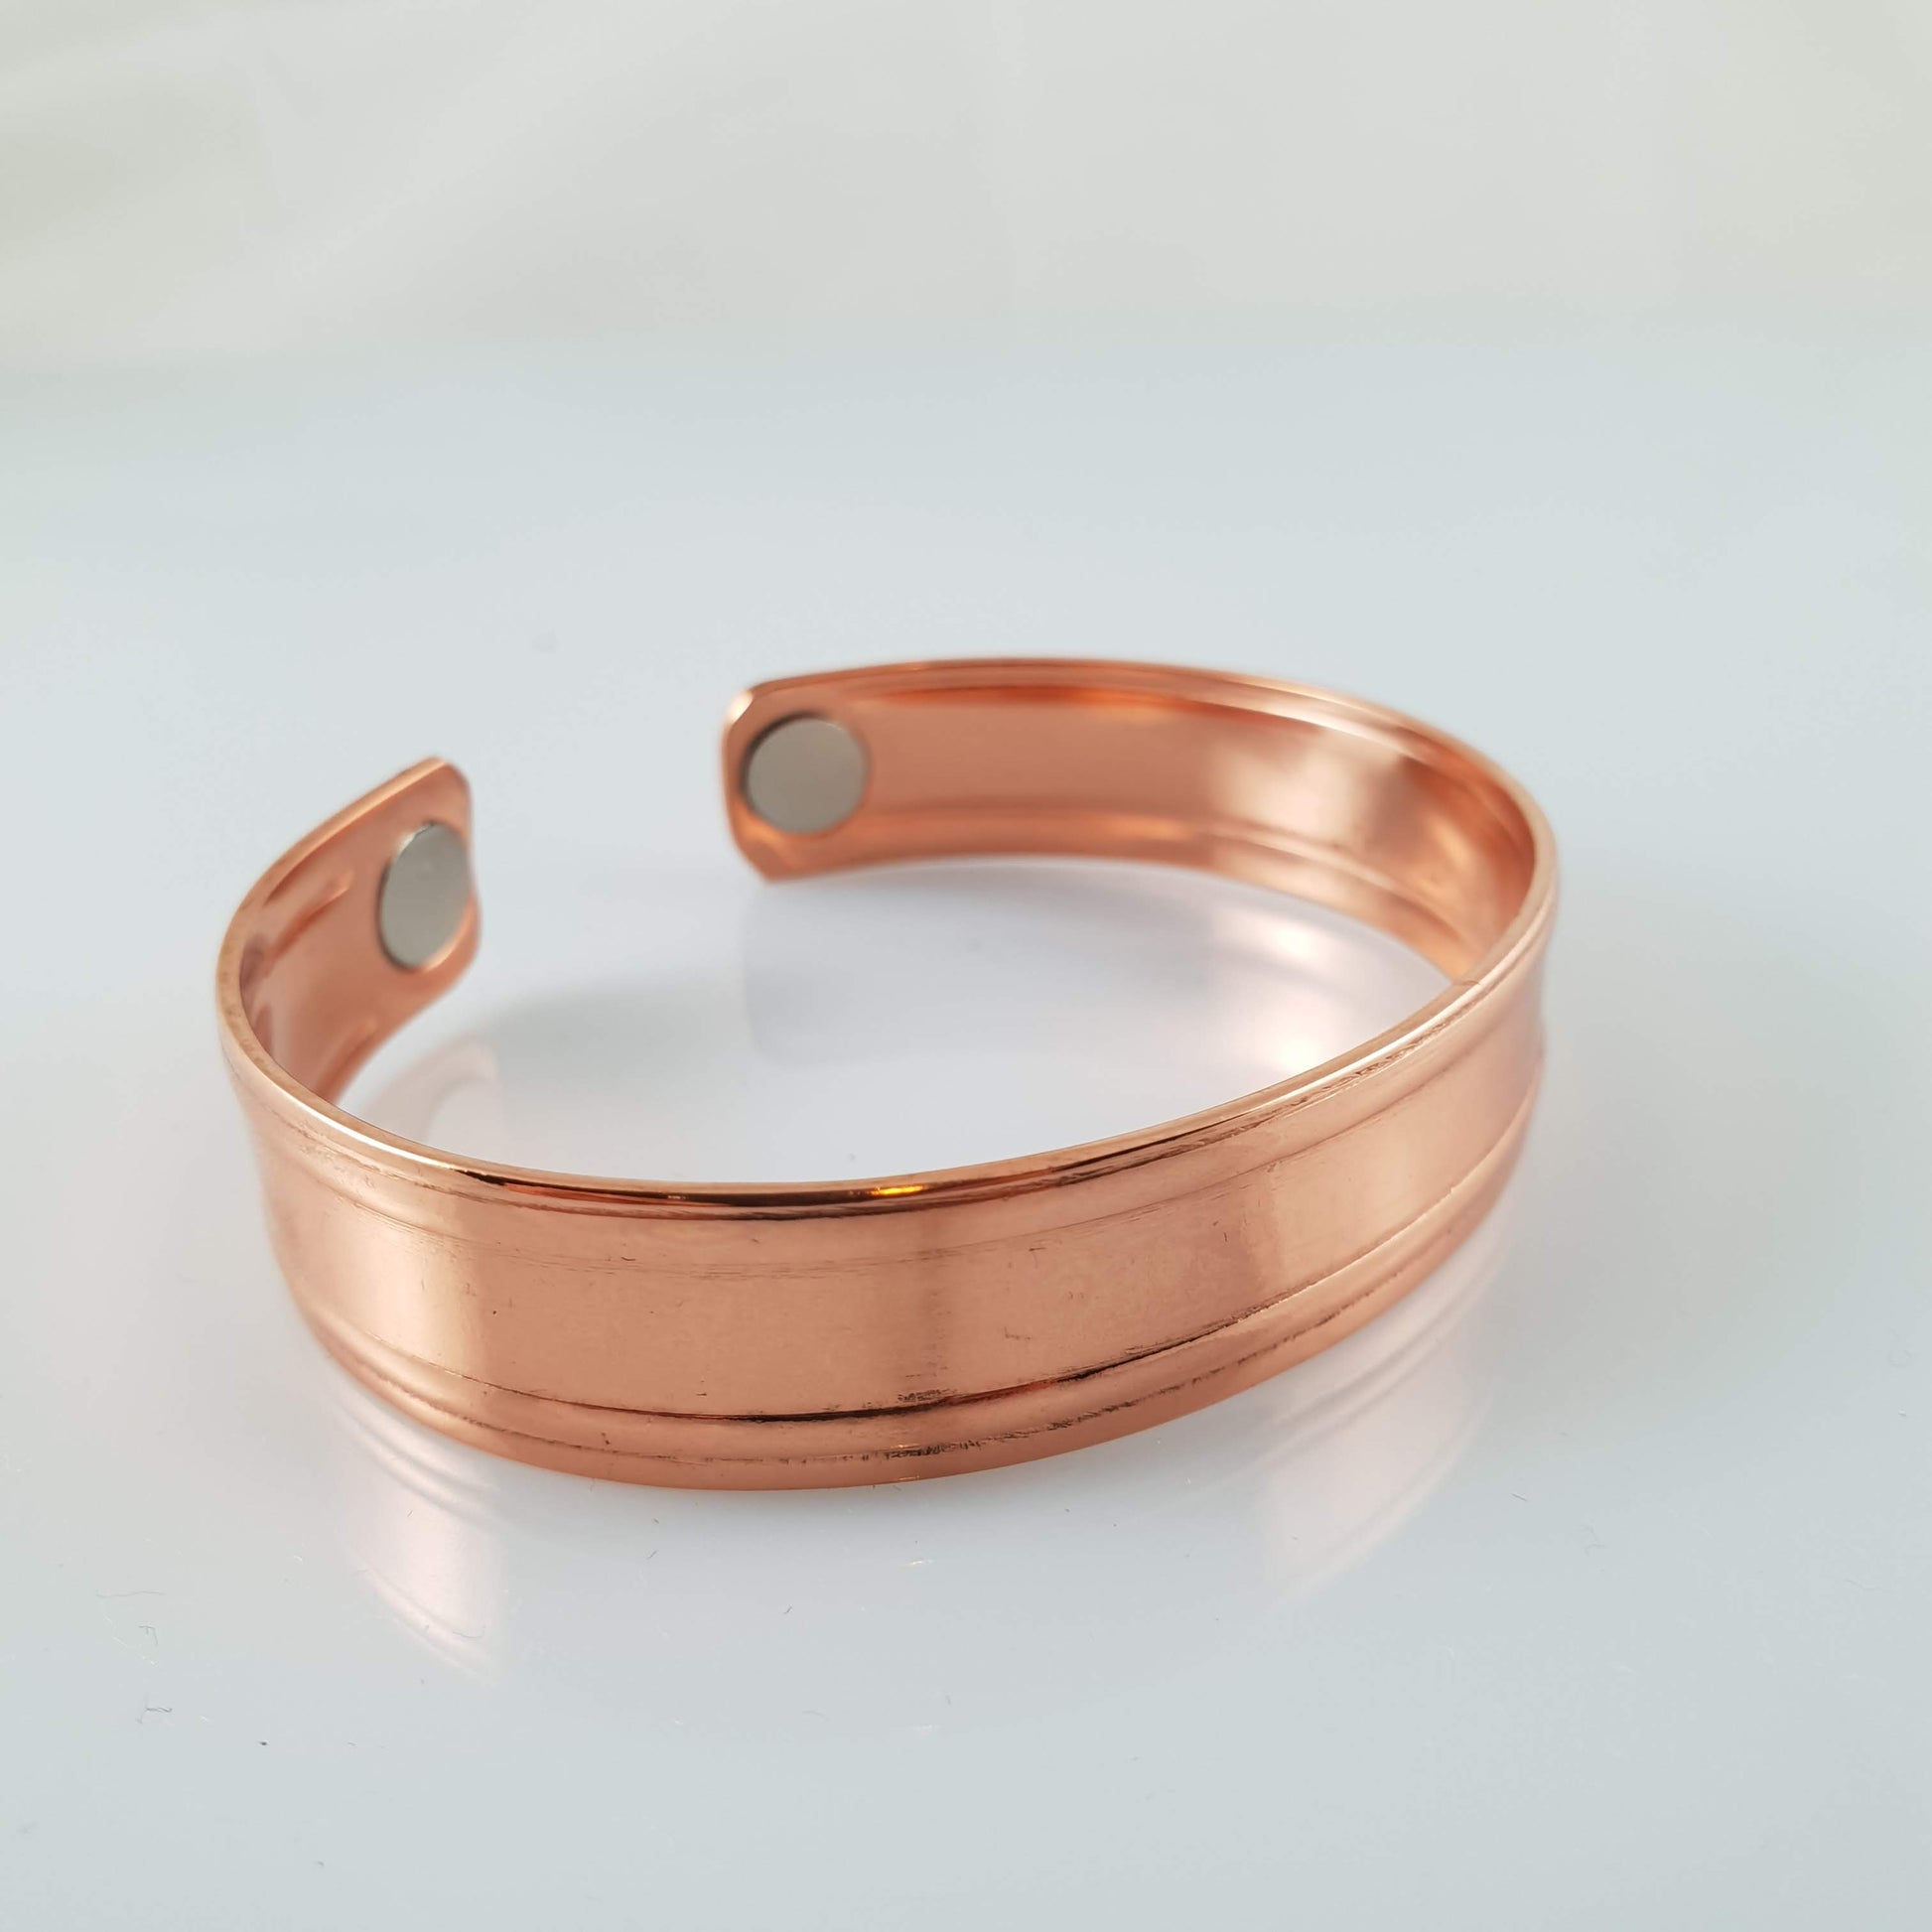 Handmade NZ Pure Copper Bracelet with Stripe - Rivendell Shop